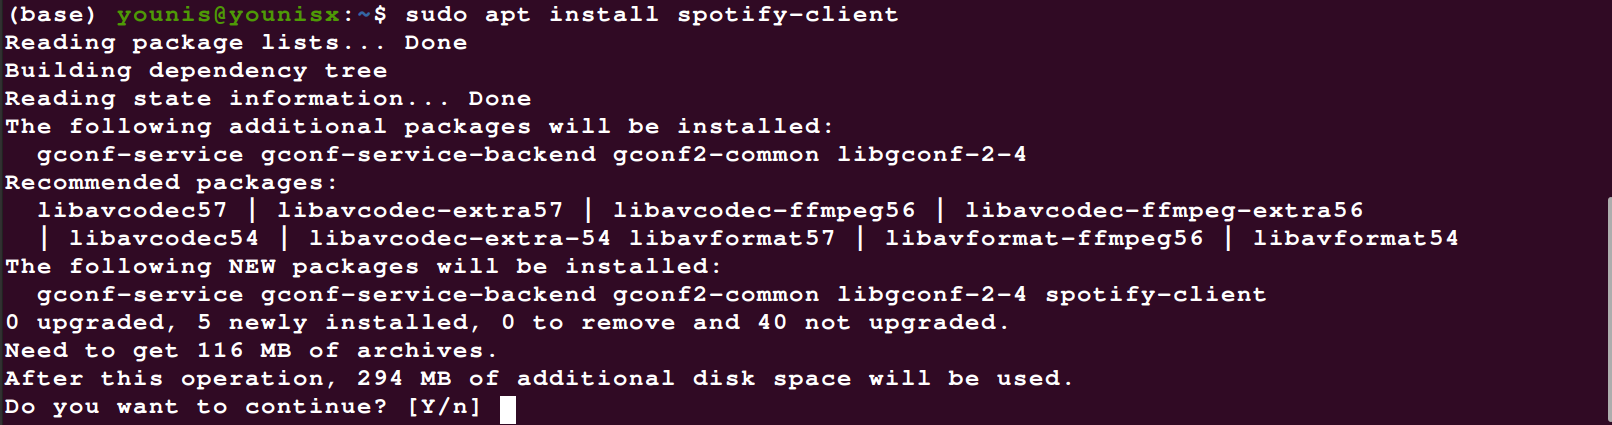 install spotify ubuntu 20.04